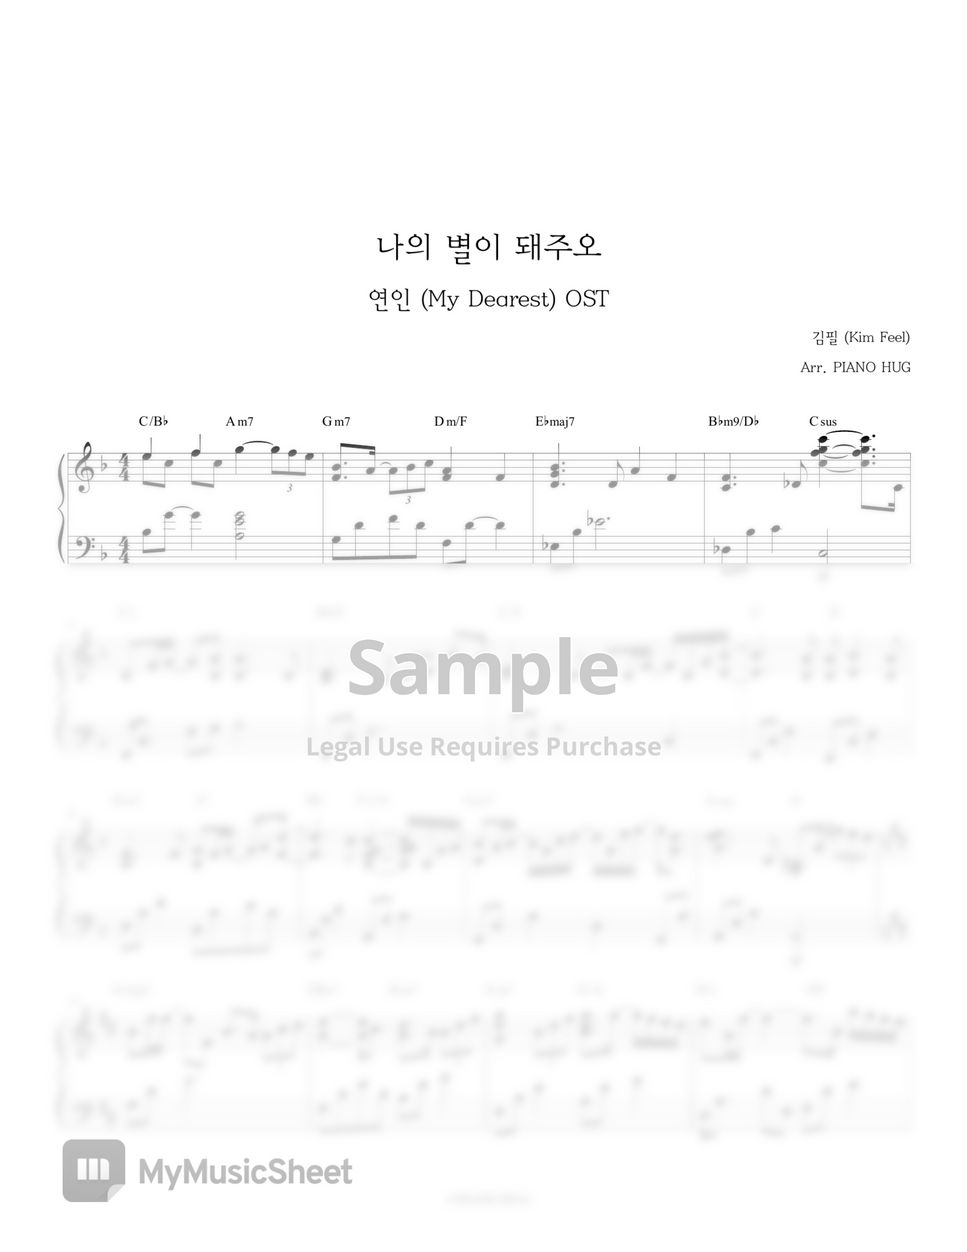 Kim Feel (김필) - 나의 별이 돼주오 (My Dearest OST) by Piano Hug